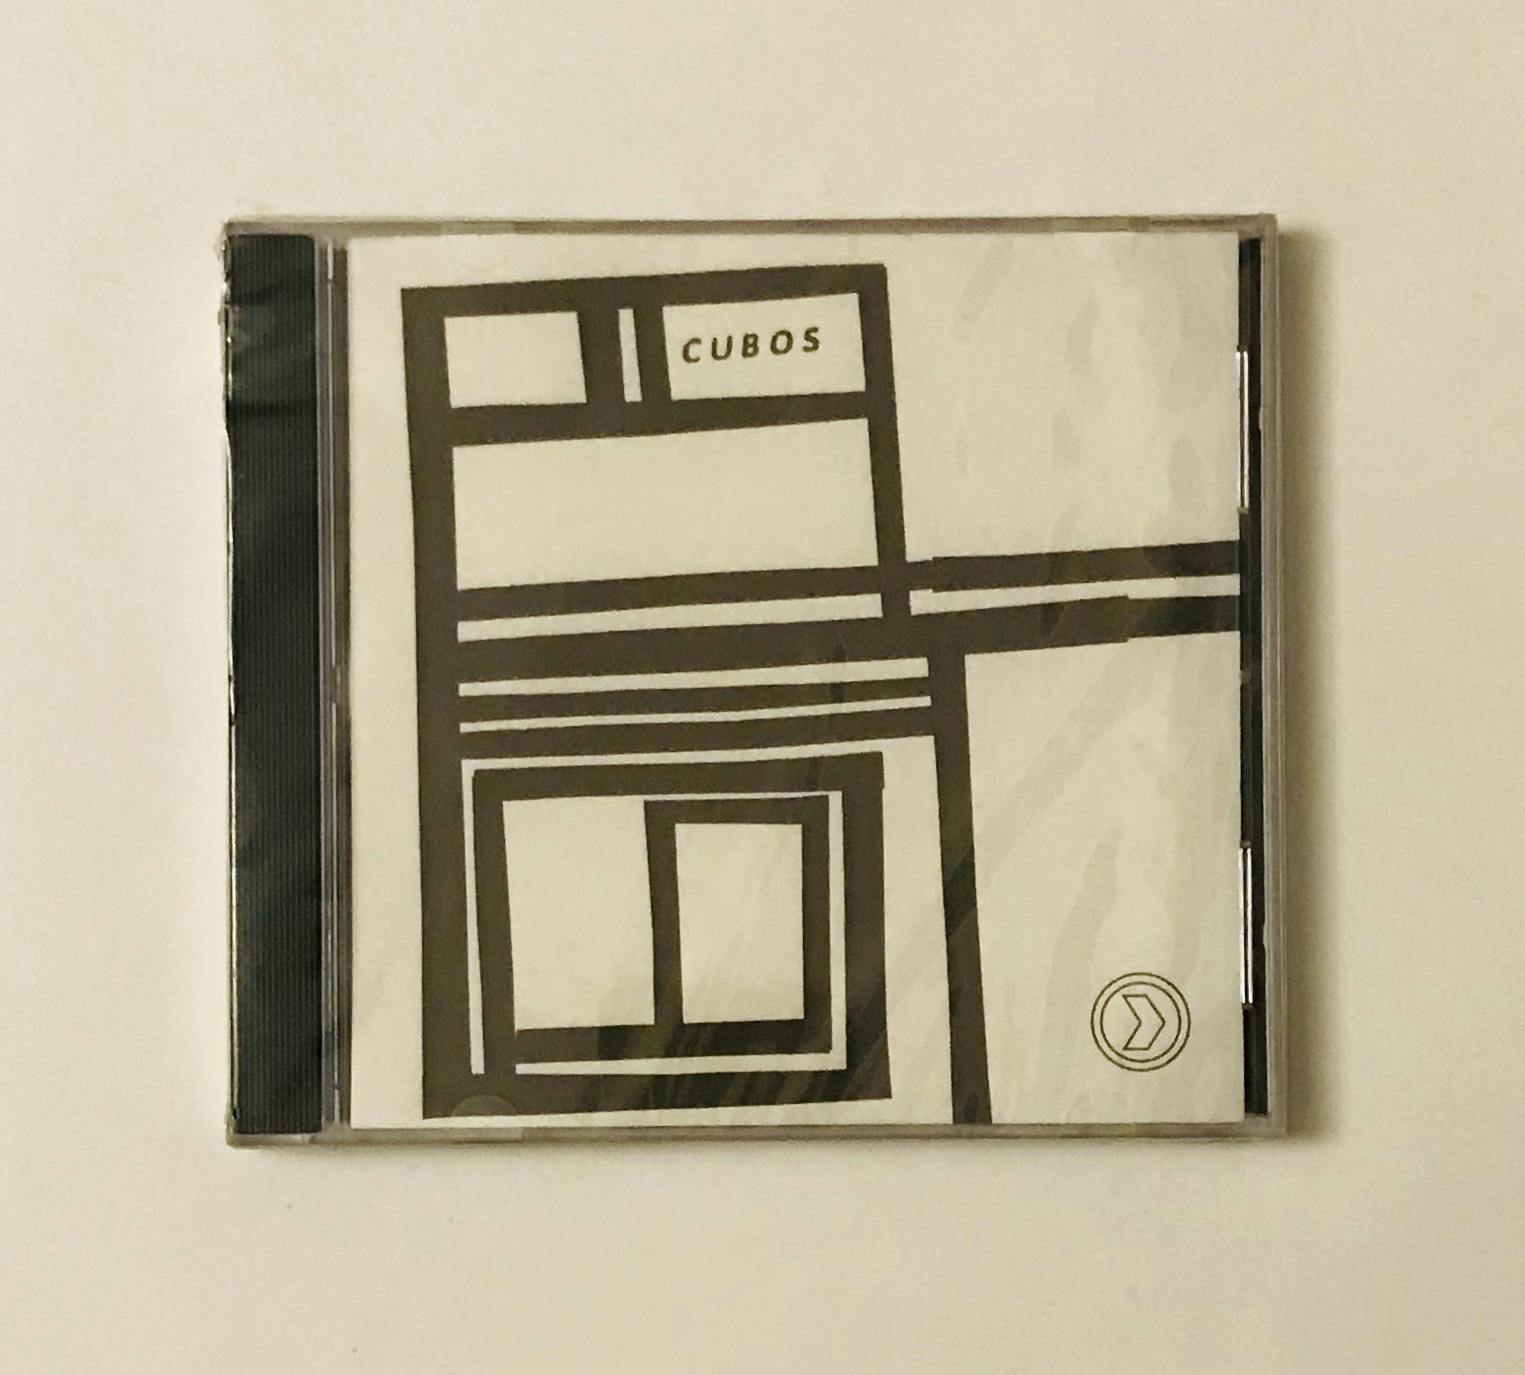 "CUBOS", CD de Esteban Castell